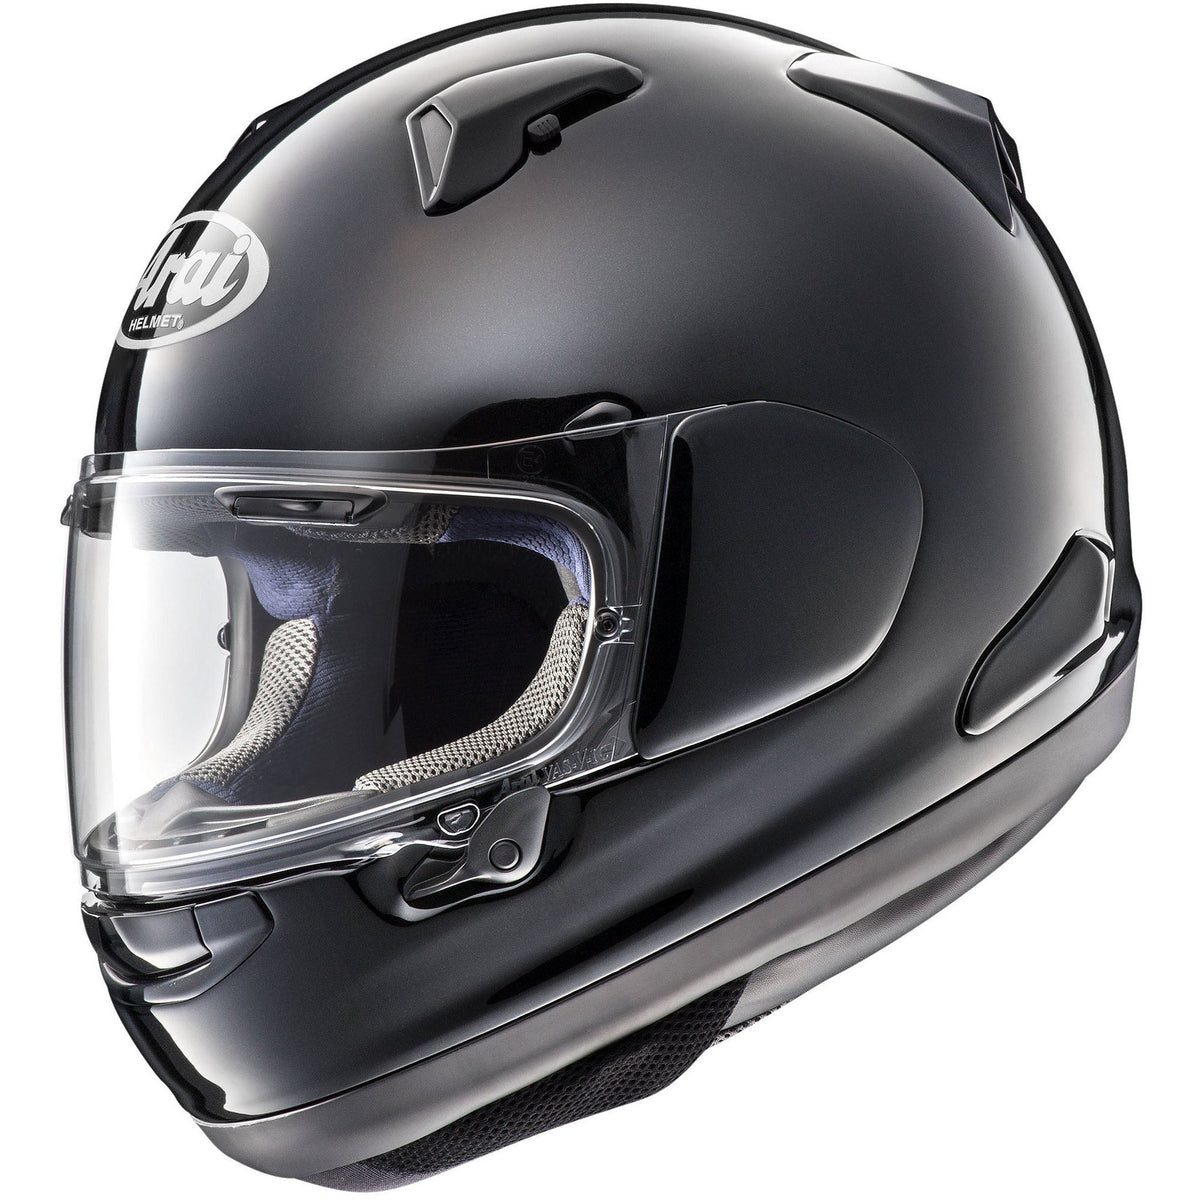 Quantum-X Helmet (Diamond Black)